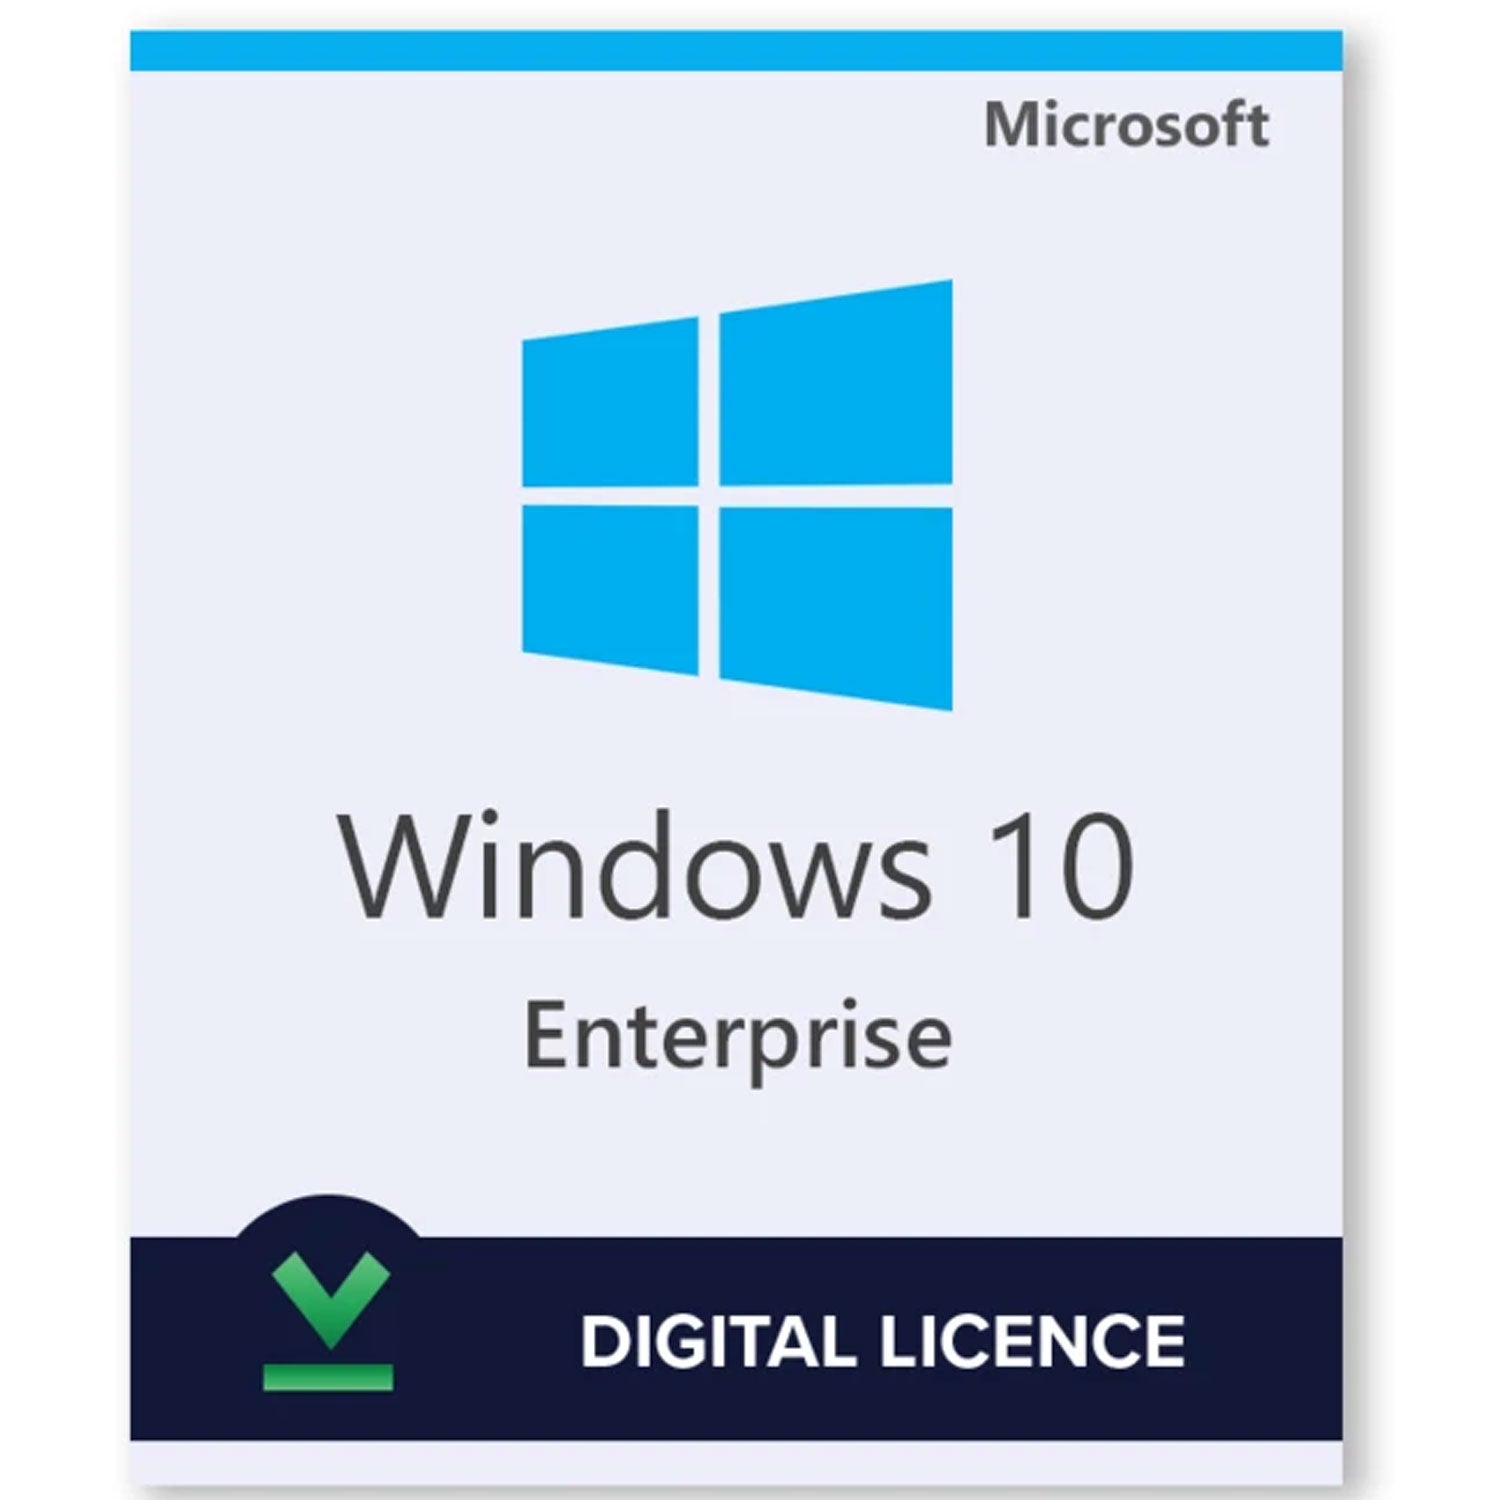 Windows 10 Enterprise Product Key License Digital - Instant cdkey